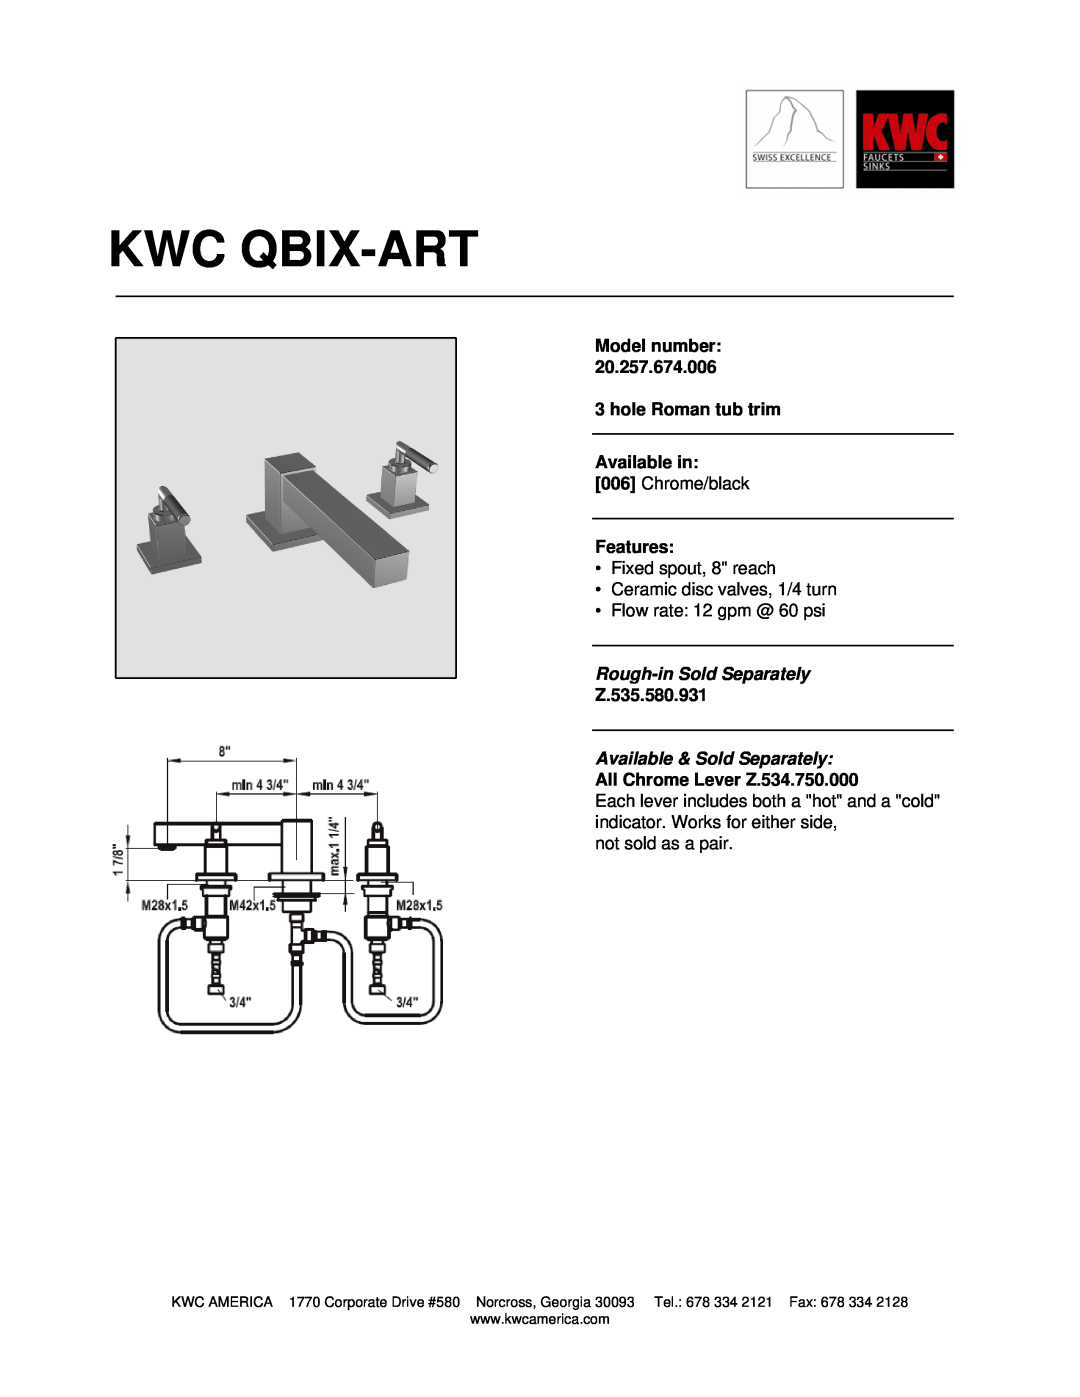 KWC 20.257.674.006 manual Kwc Qbix-Art, Model number 3 hole Roman tub trim Available in, Chrome/black, Features 